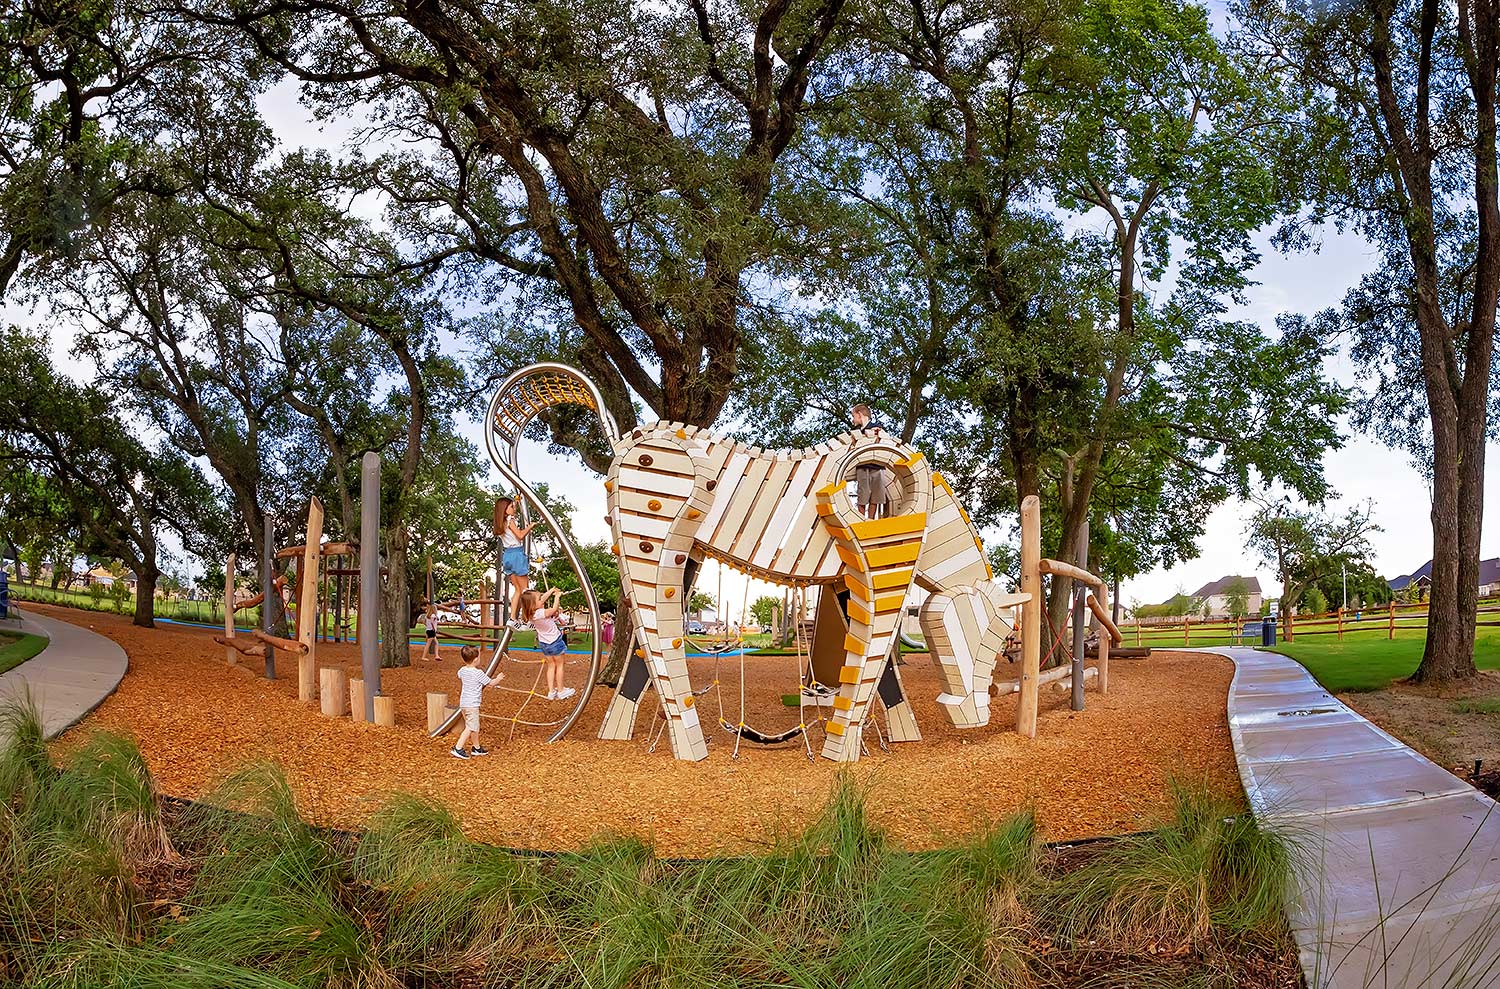 The Best Park for Kids in Houston - Texas Commercial Photographer